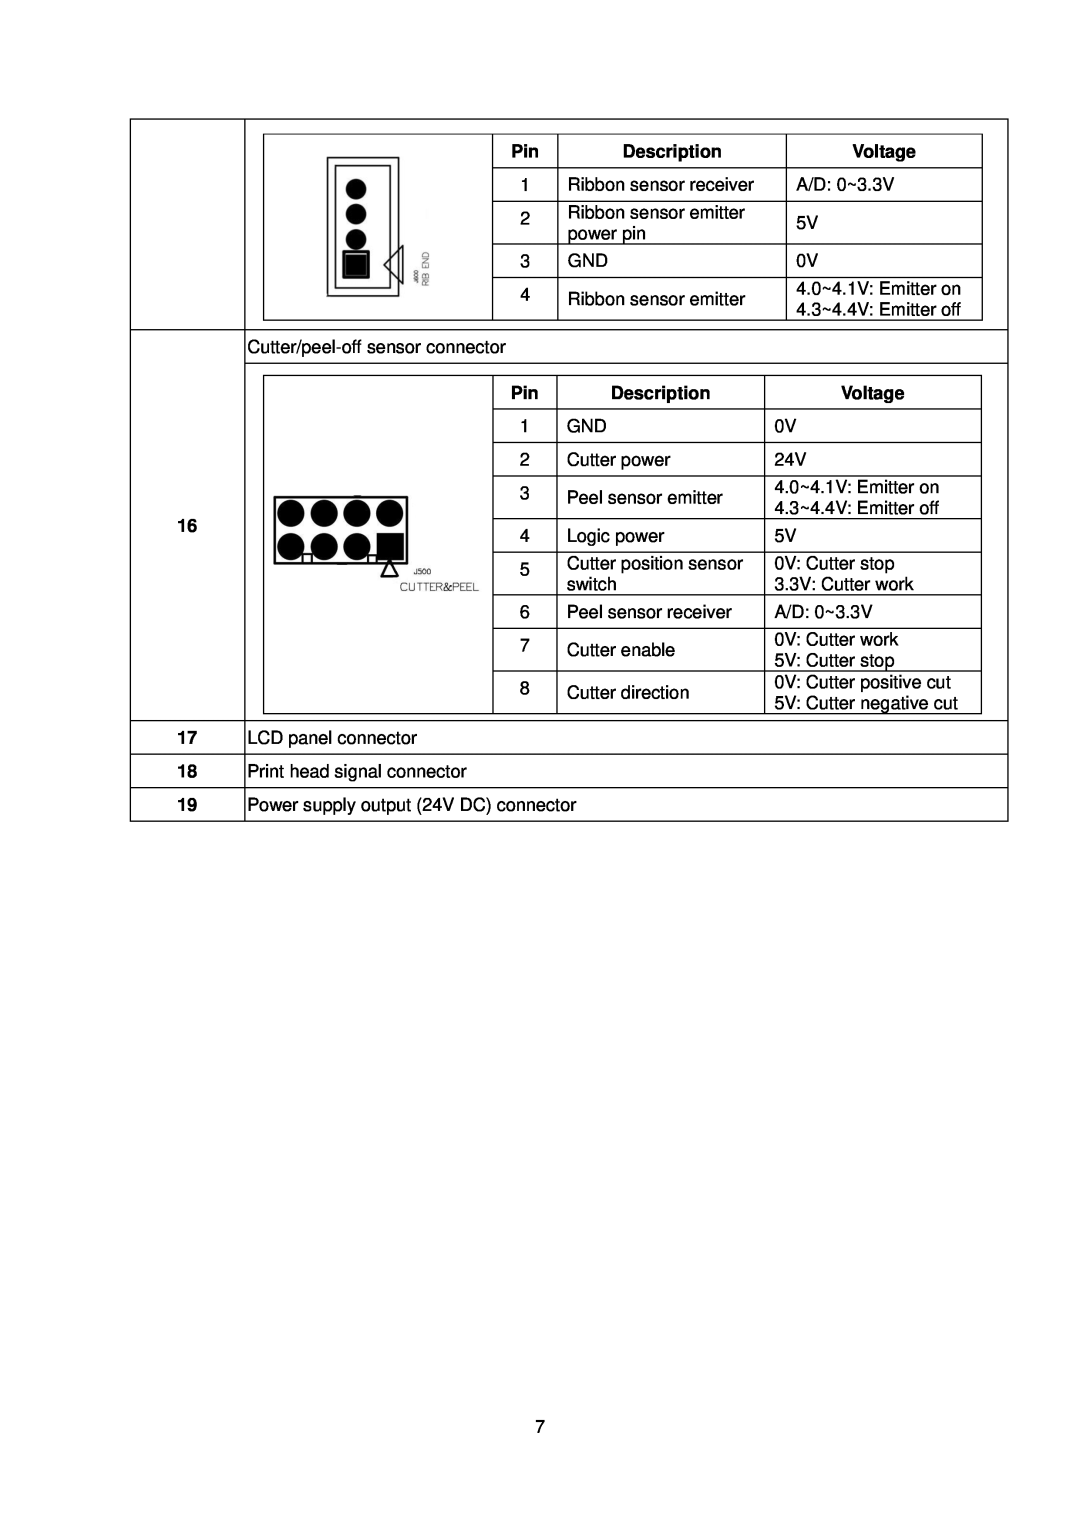 The Speaker Company me240 manual Description, Voltage 